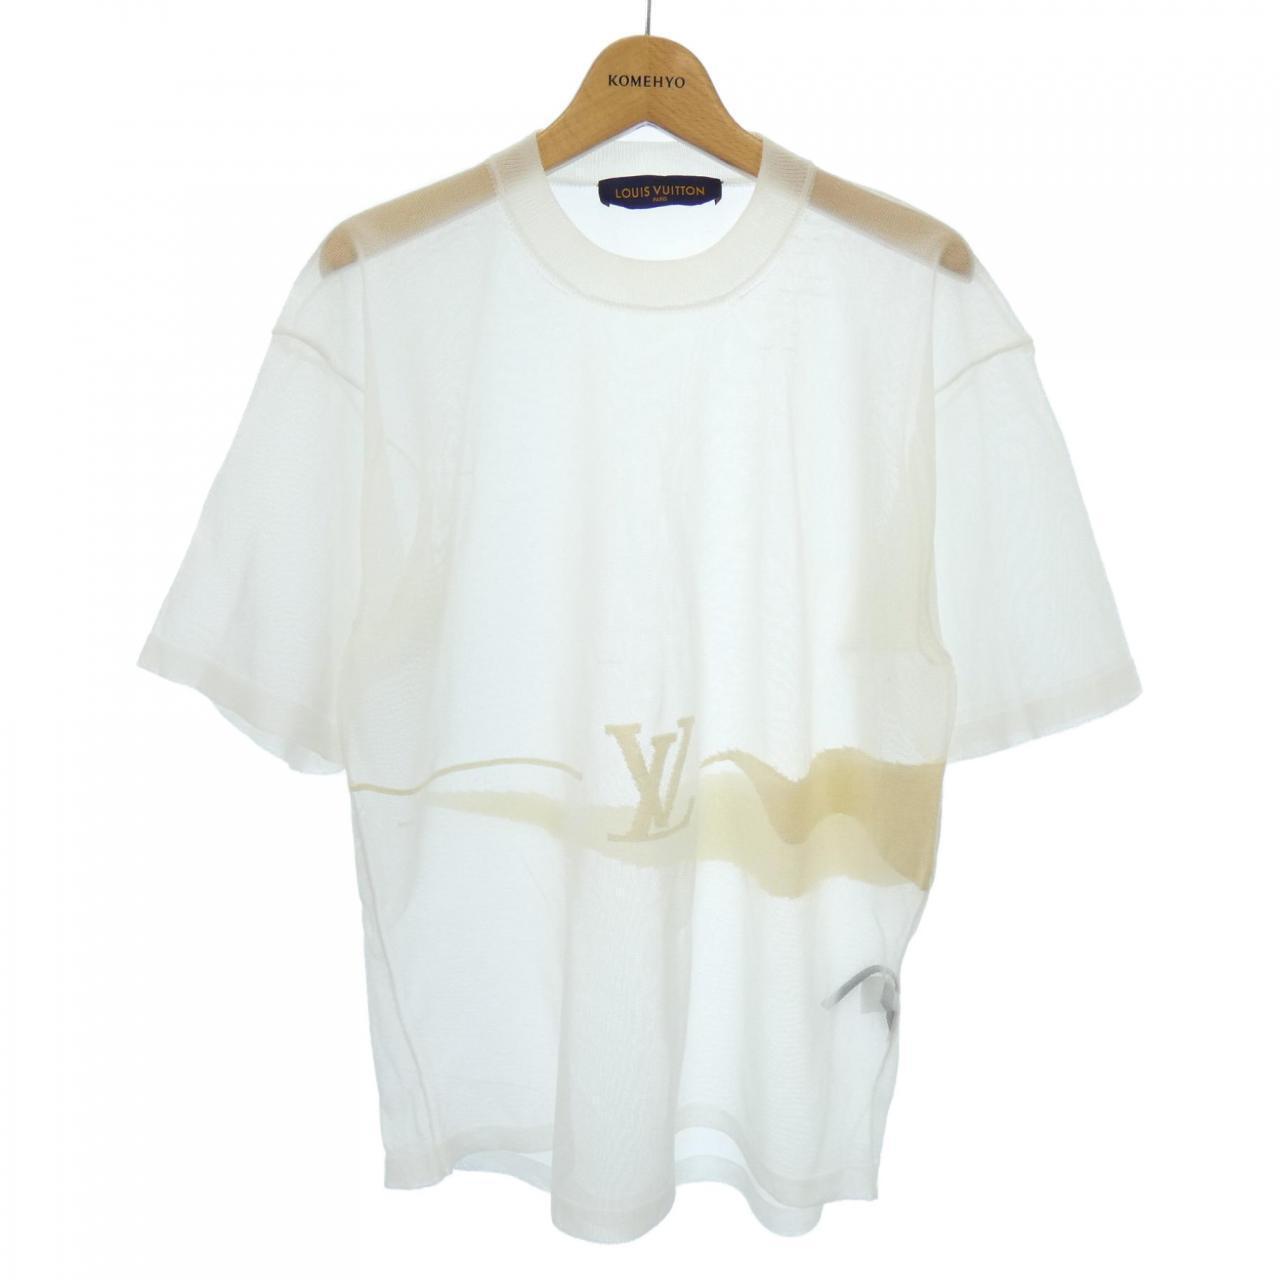 Louis Vuitton T Shirt Short Sleeve Men s White Logo Embroidery